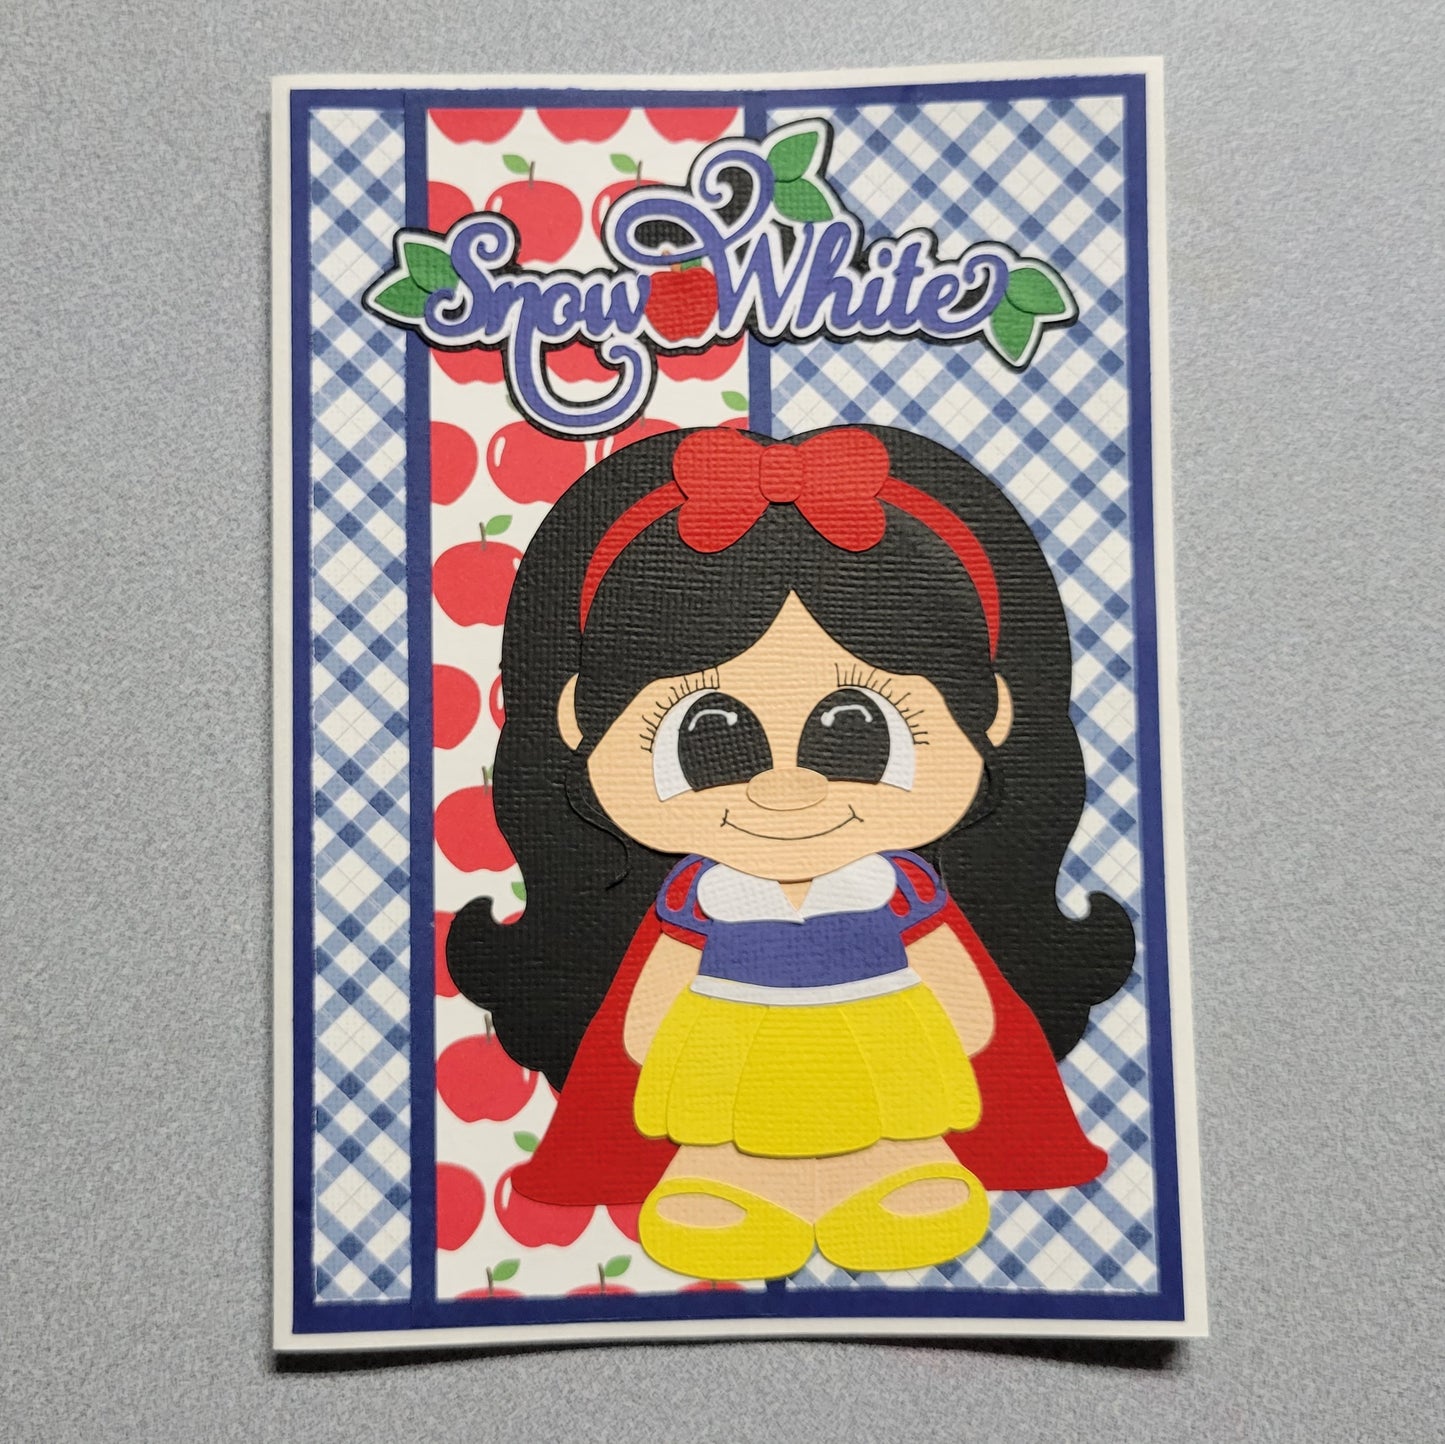 Snow White Birthday Card